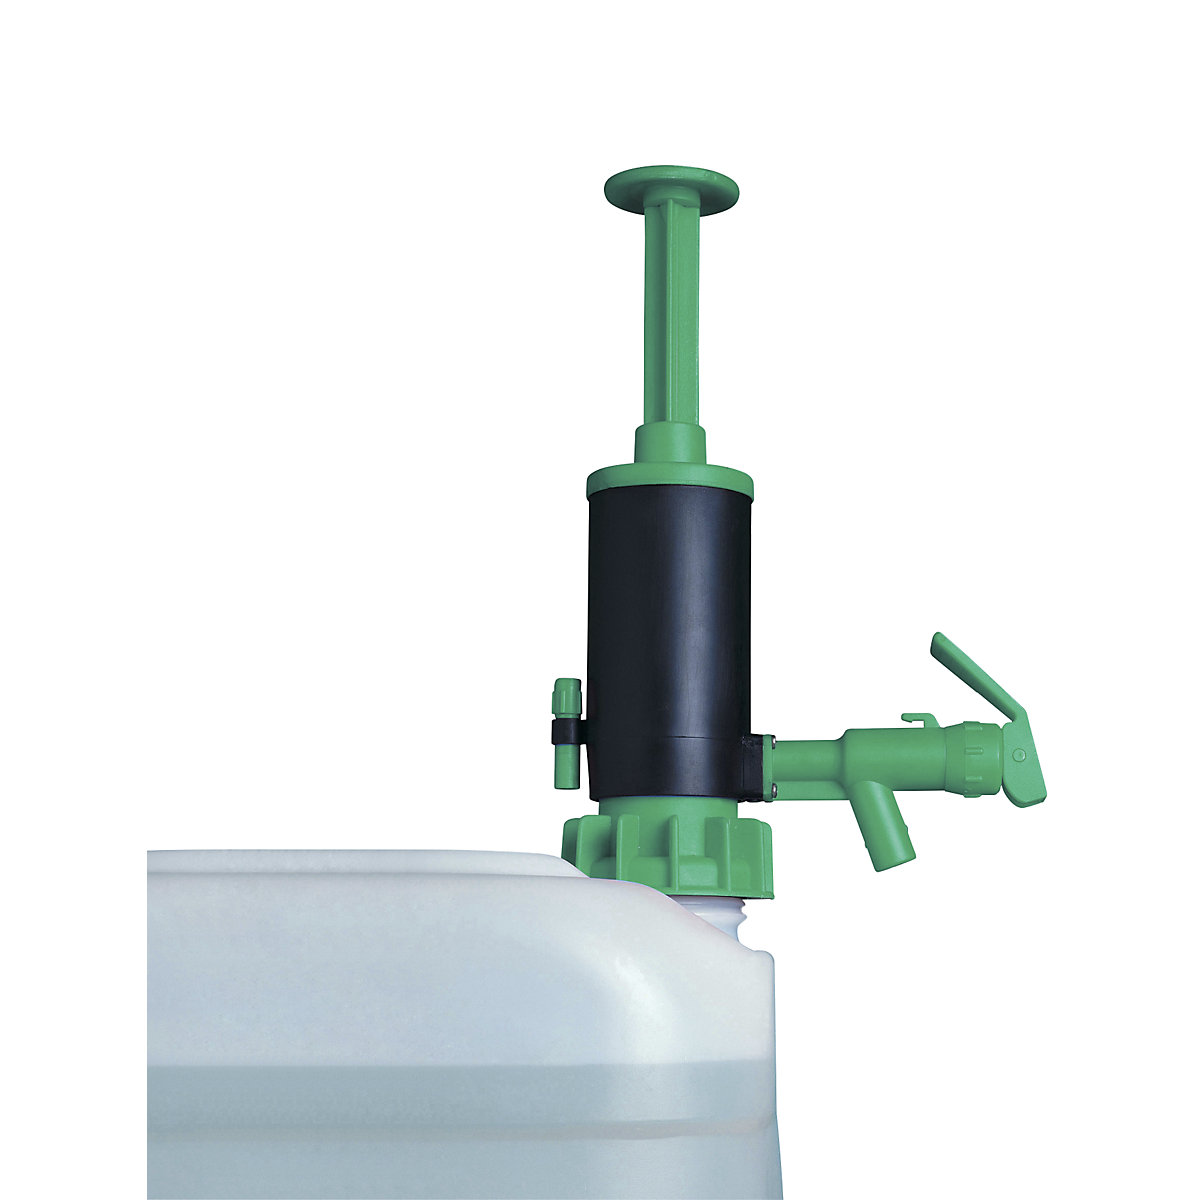 Jessberger – Pompa dosatrice manuale per taniche/fusti: per acidi, verde |  KAISER+KRAFT